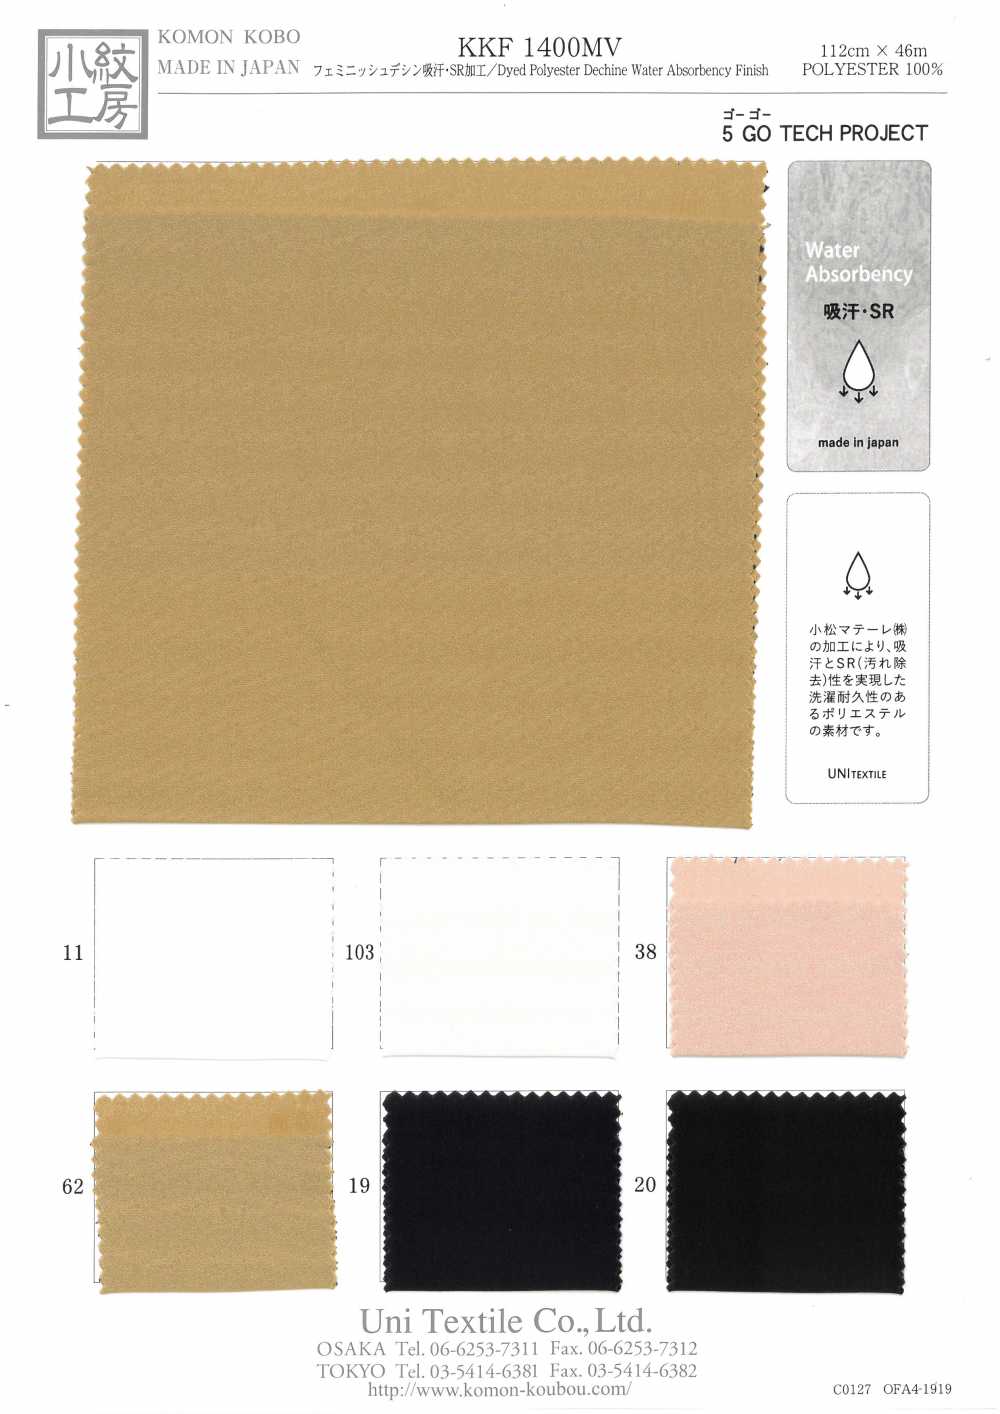 KKF1400MV Feminine Decin Sweat Absorption / SR Processing[Textile / Fabric] Uni Textile